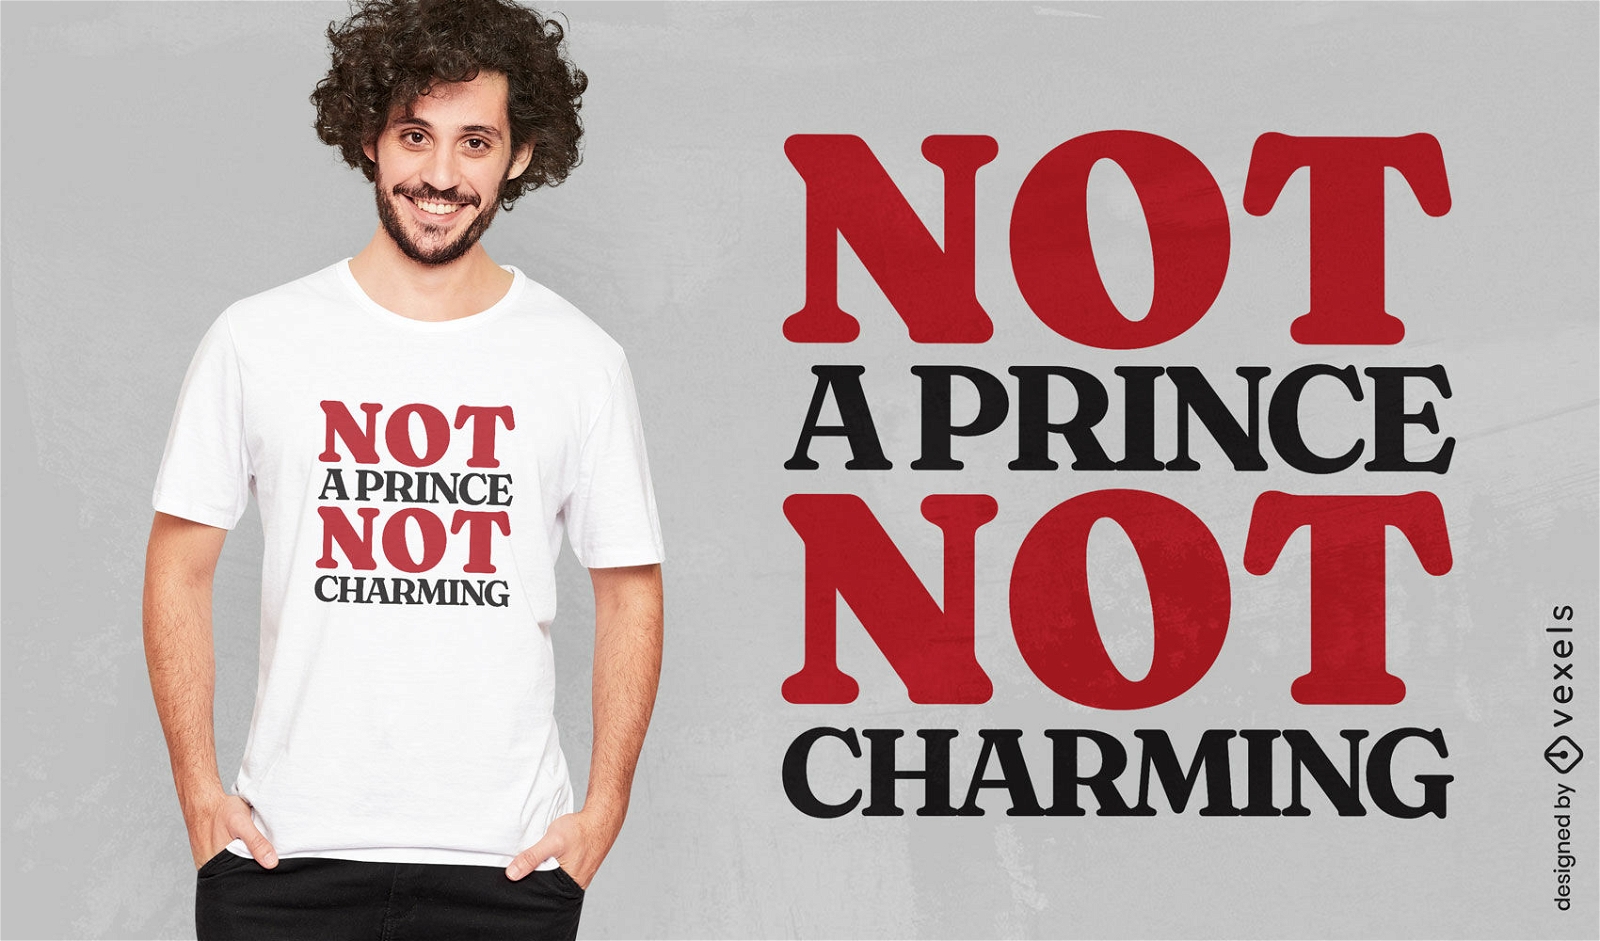 Not a prince charming t-shirt design